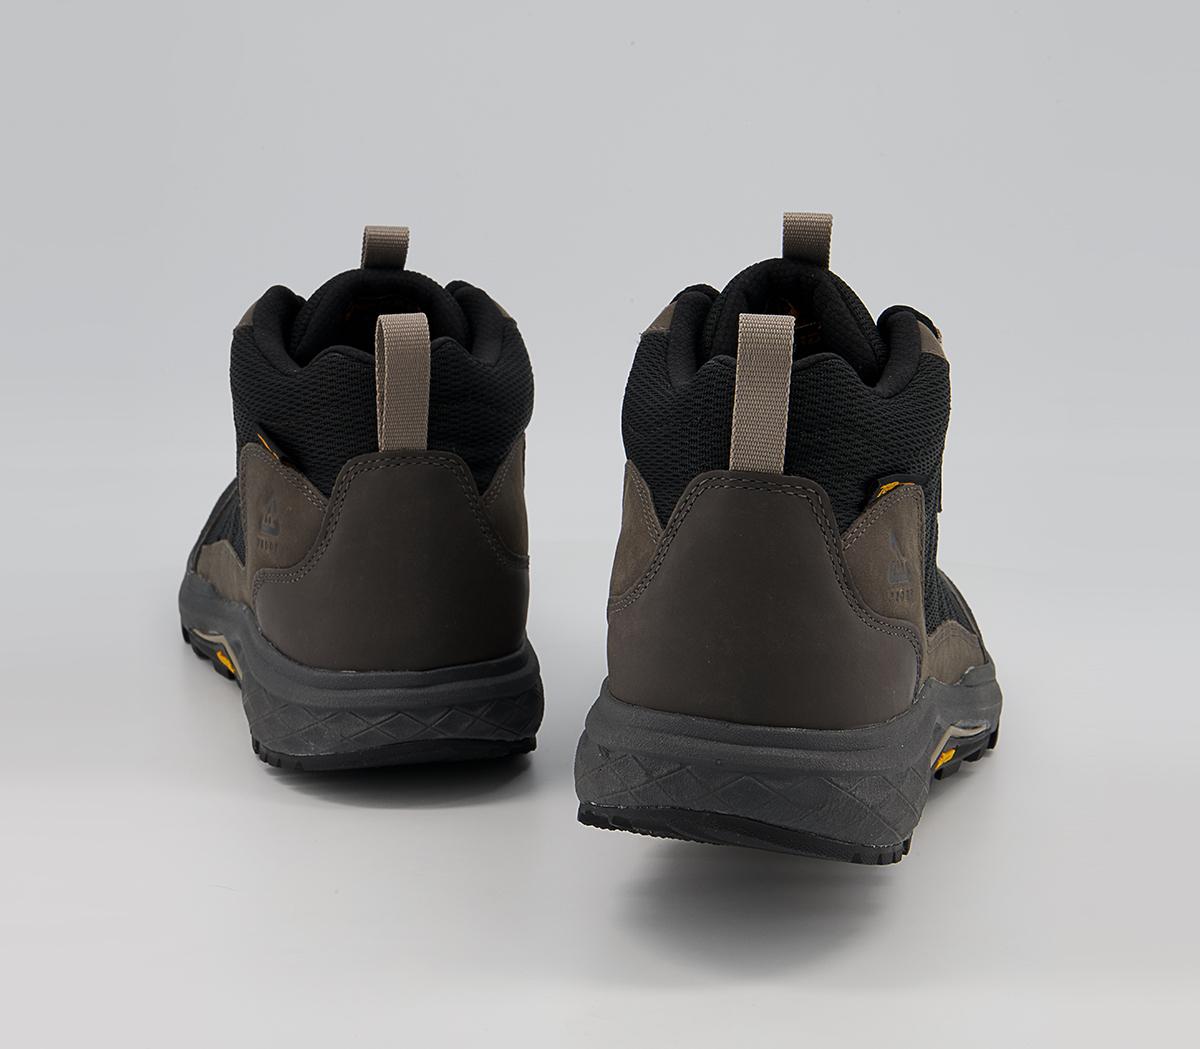 Teva Ridgeview Mid Rp Boots Grey Black - Men’s Boots